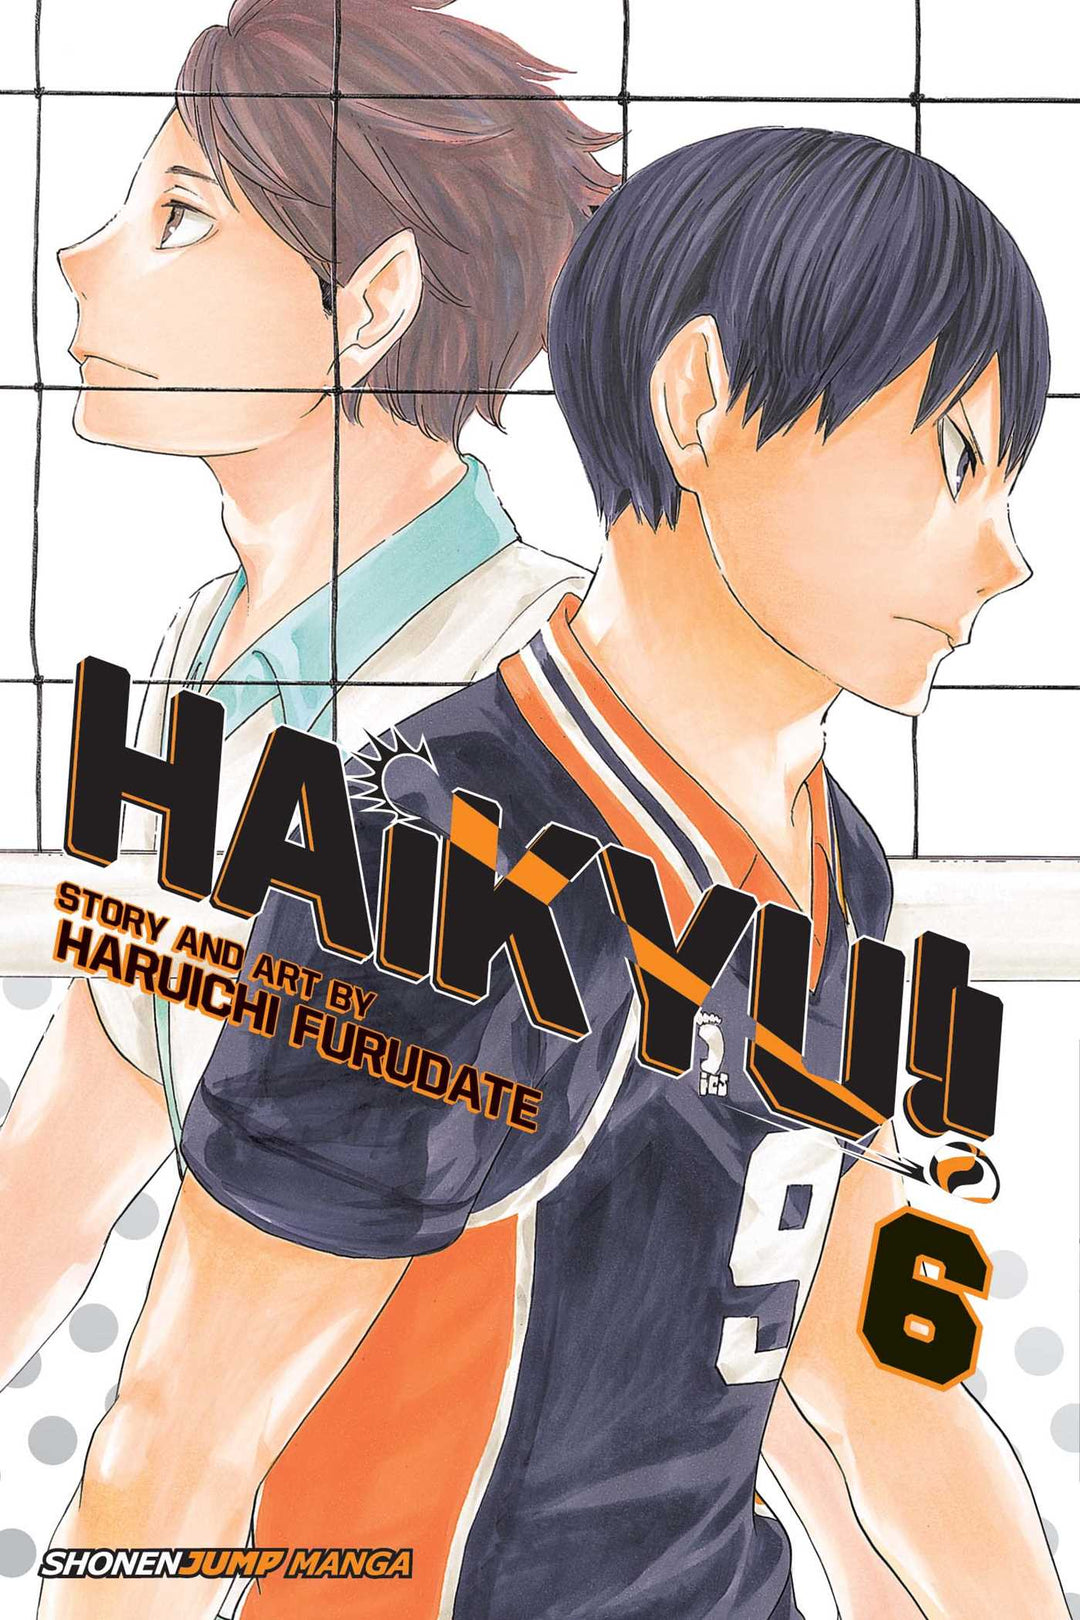 Haikyu!!, Vol. 06 - Manga Mate